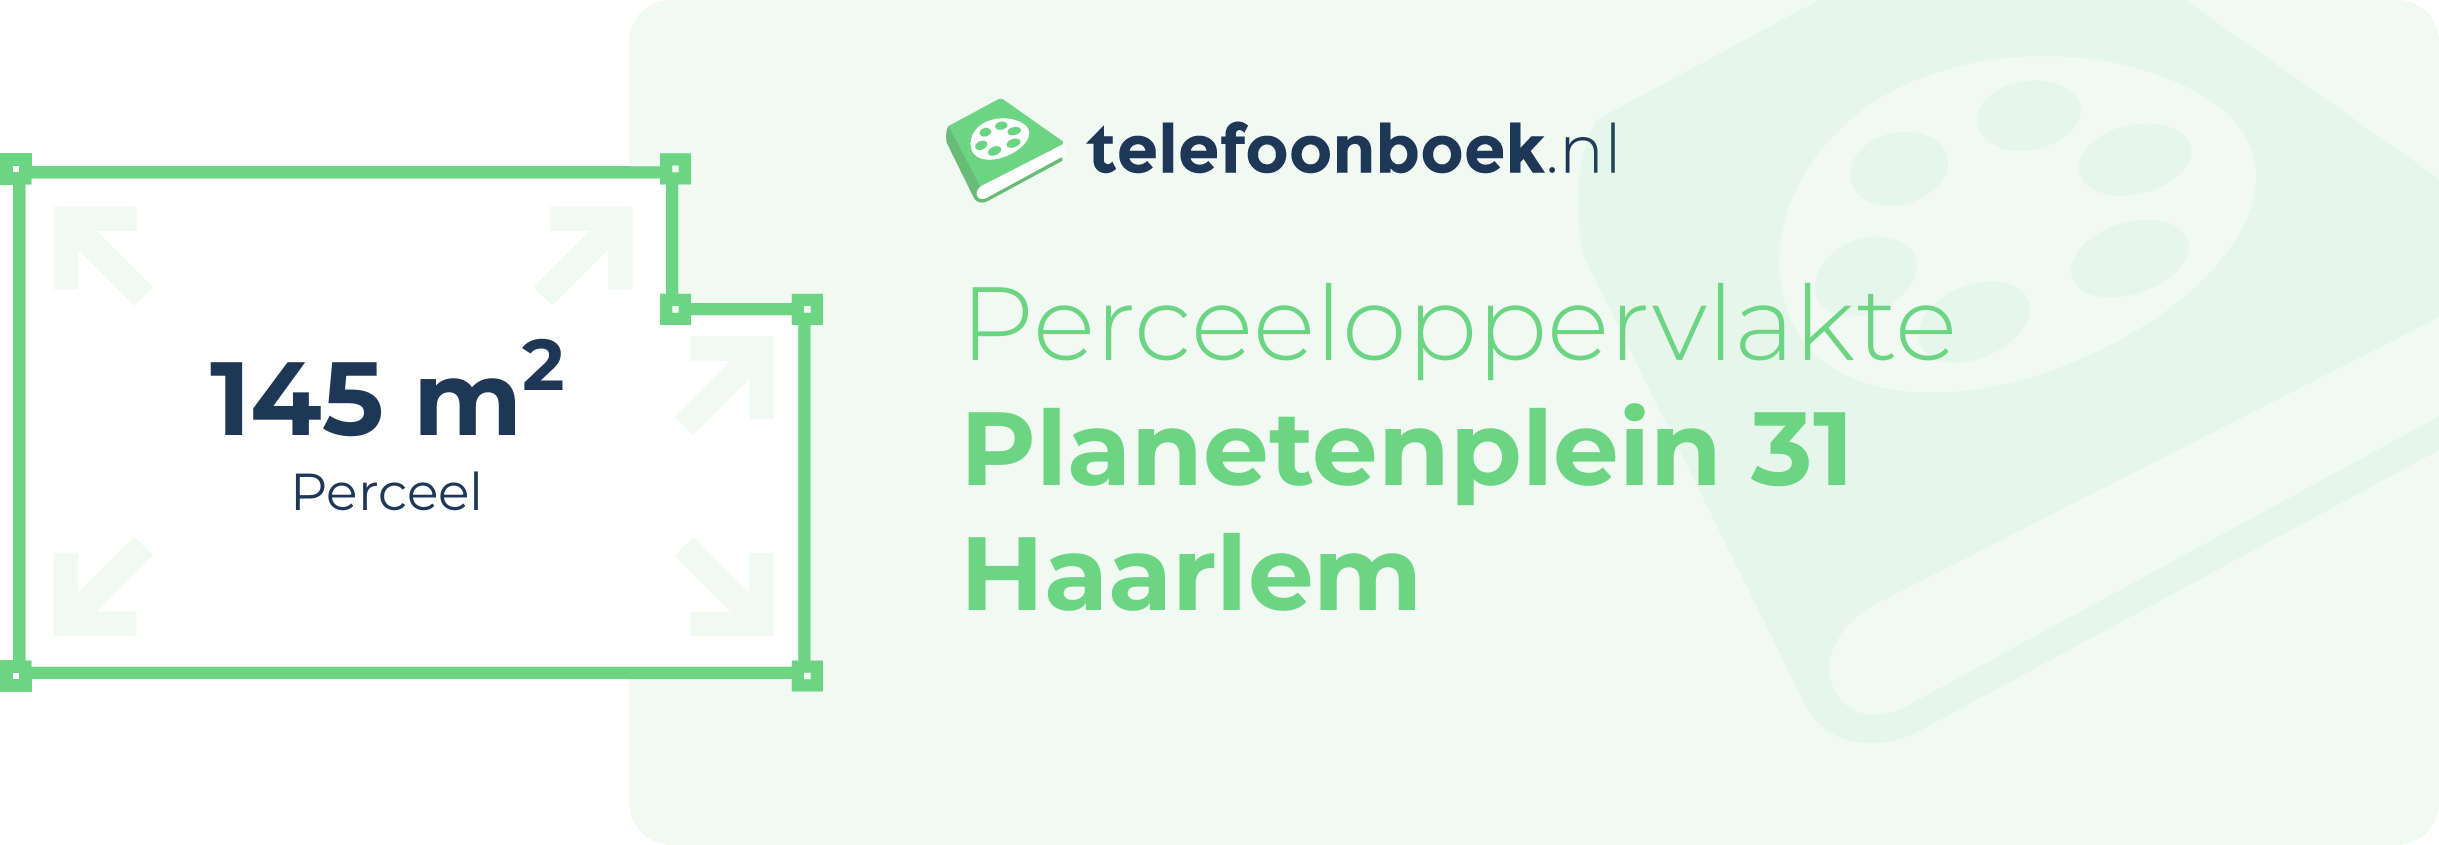 Perceeloppervlakte Planetenplein 31 Haarlem